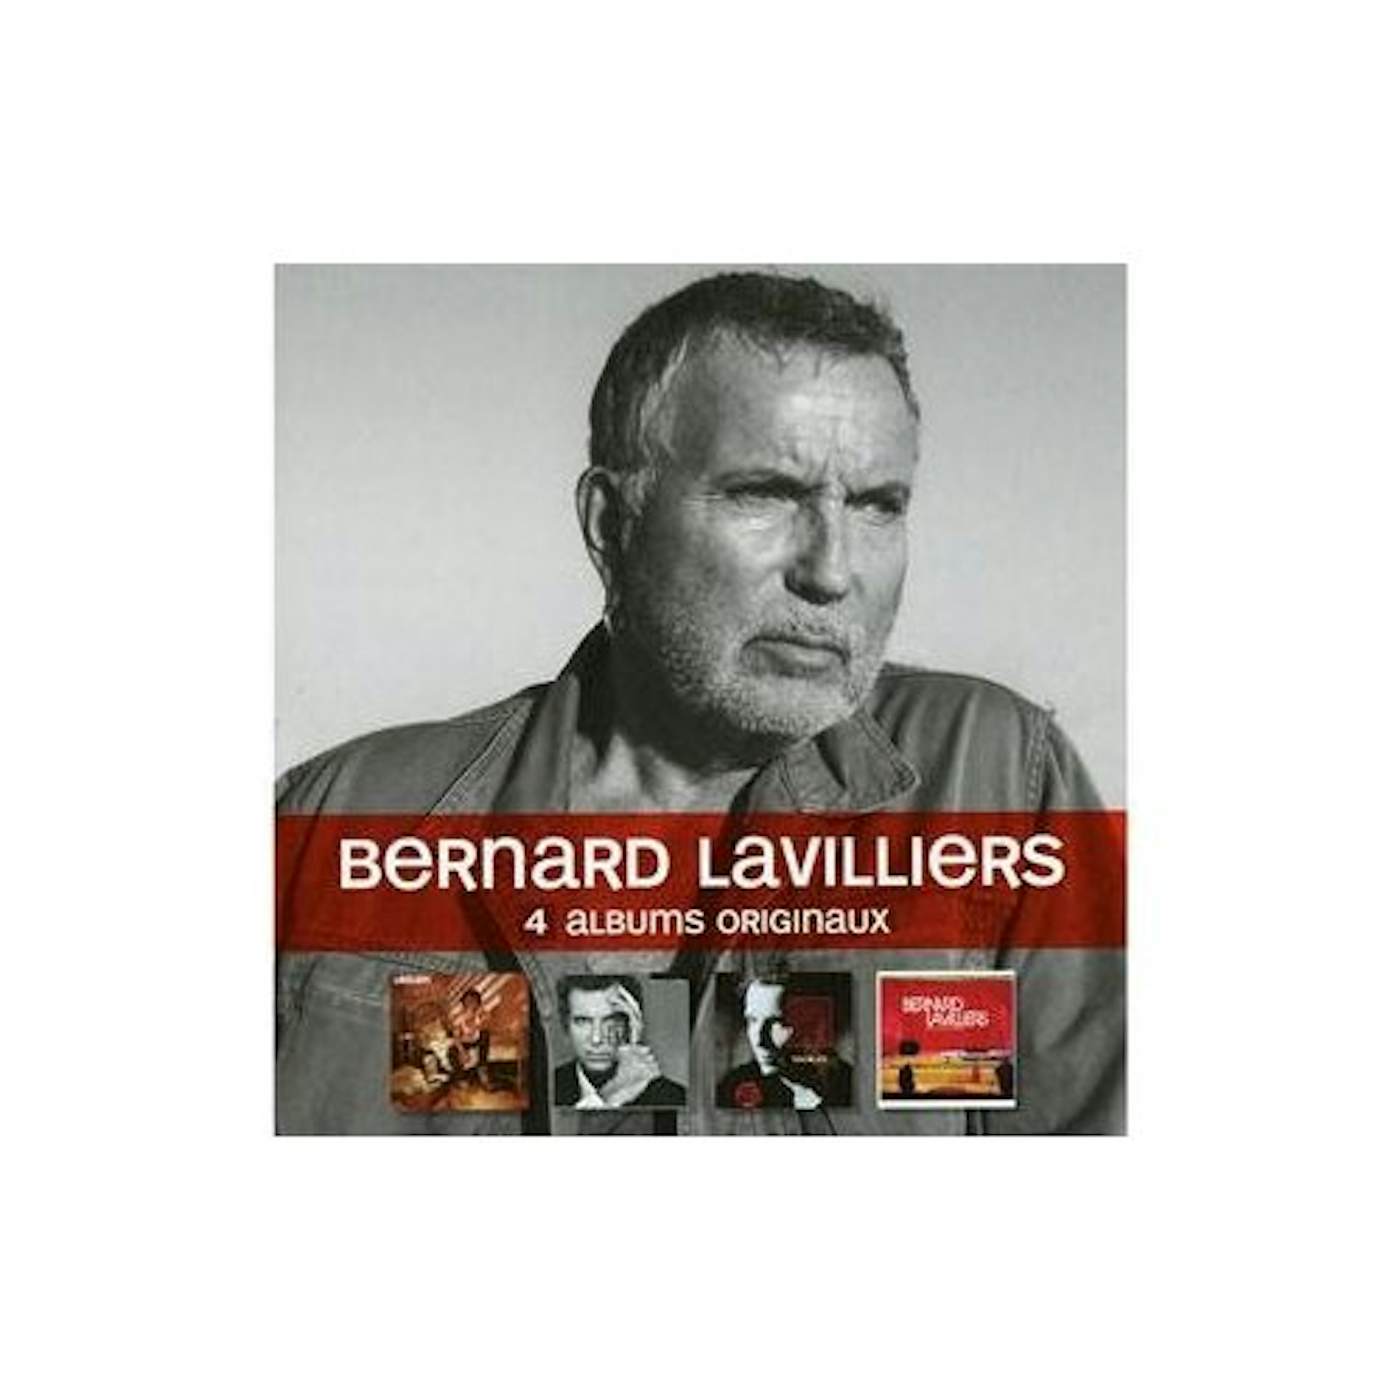 Bernard Lavilliers 4 ORIGINAL ALBUMS CD